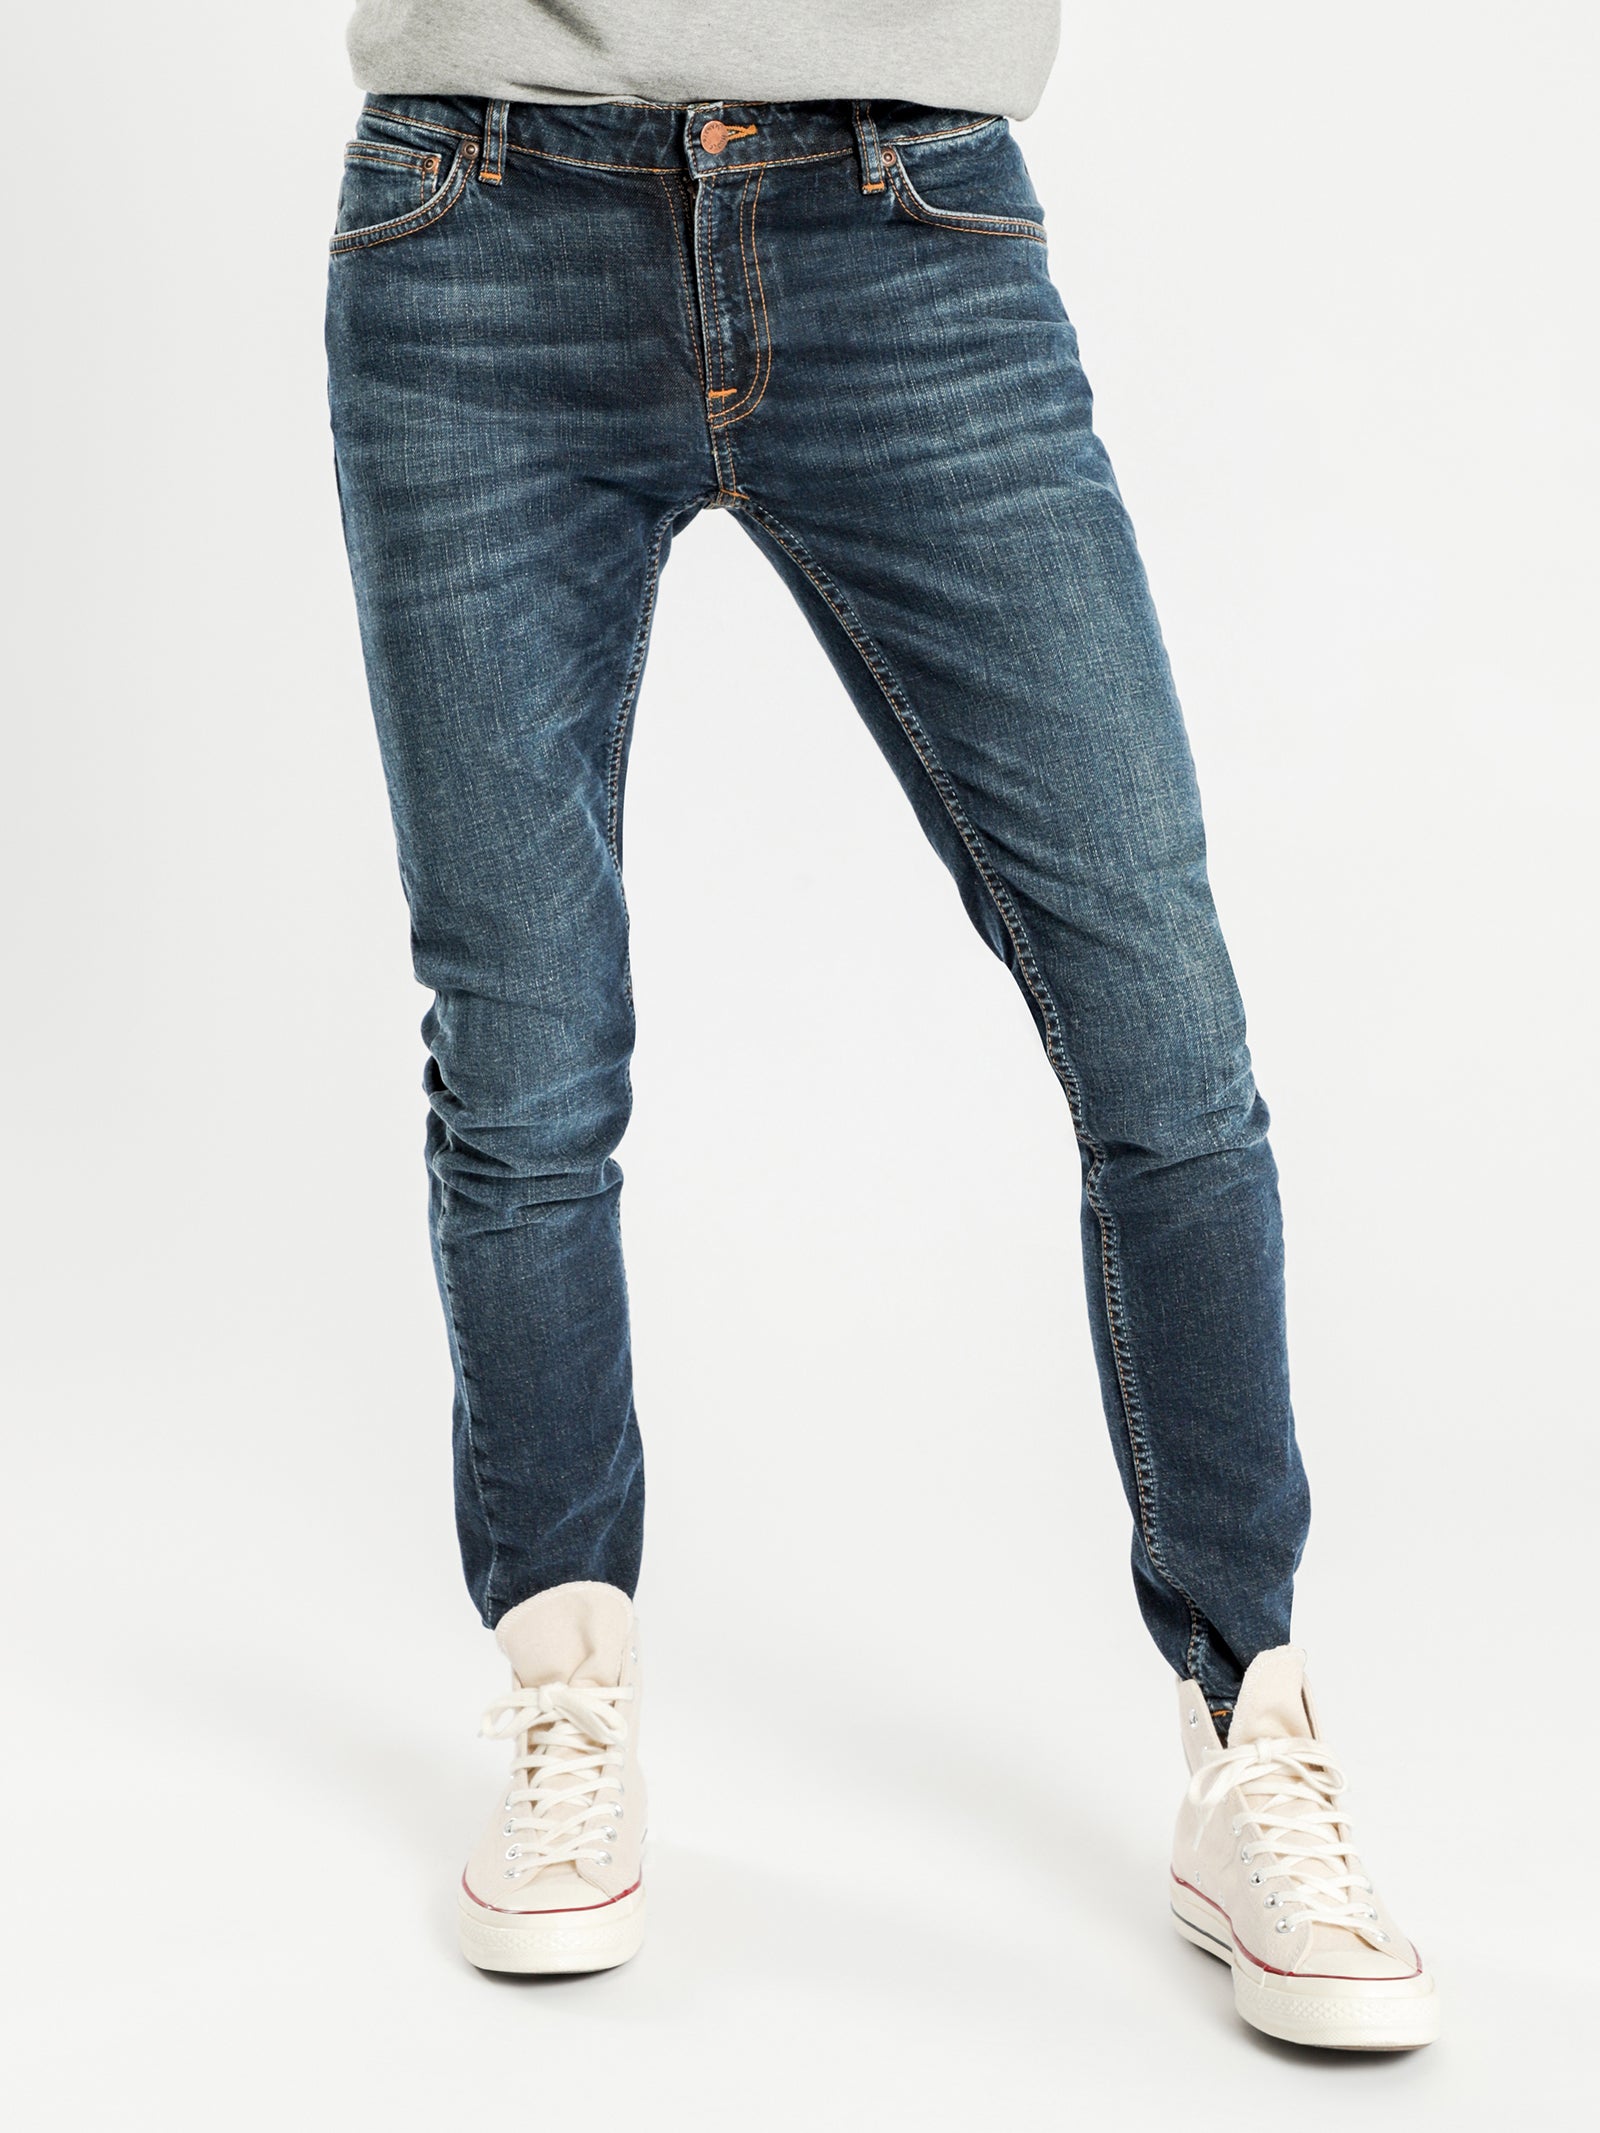 Skinny Lin Jeans in West Coast Worn Denim - Glue Store